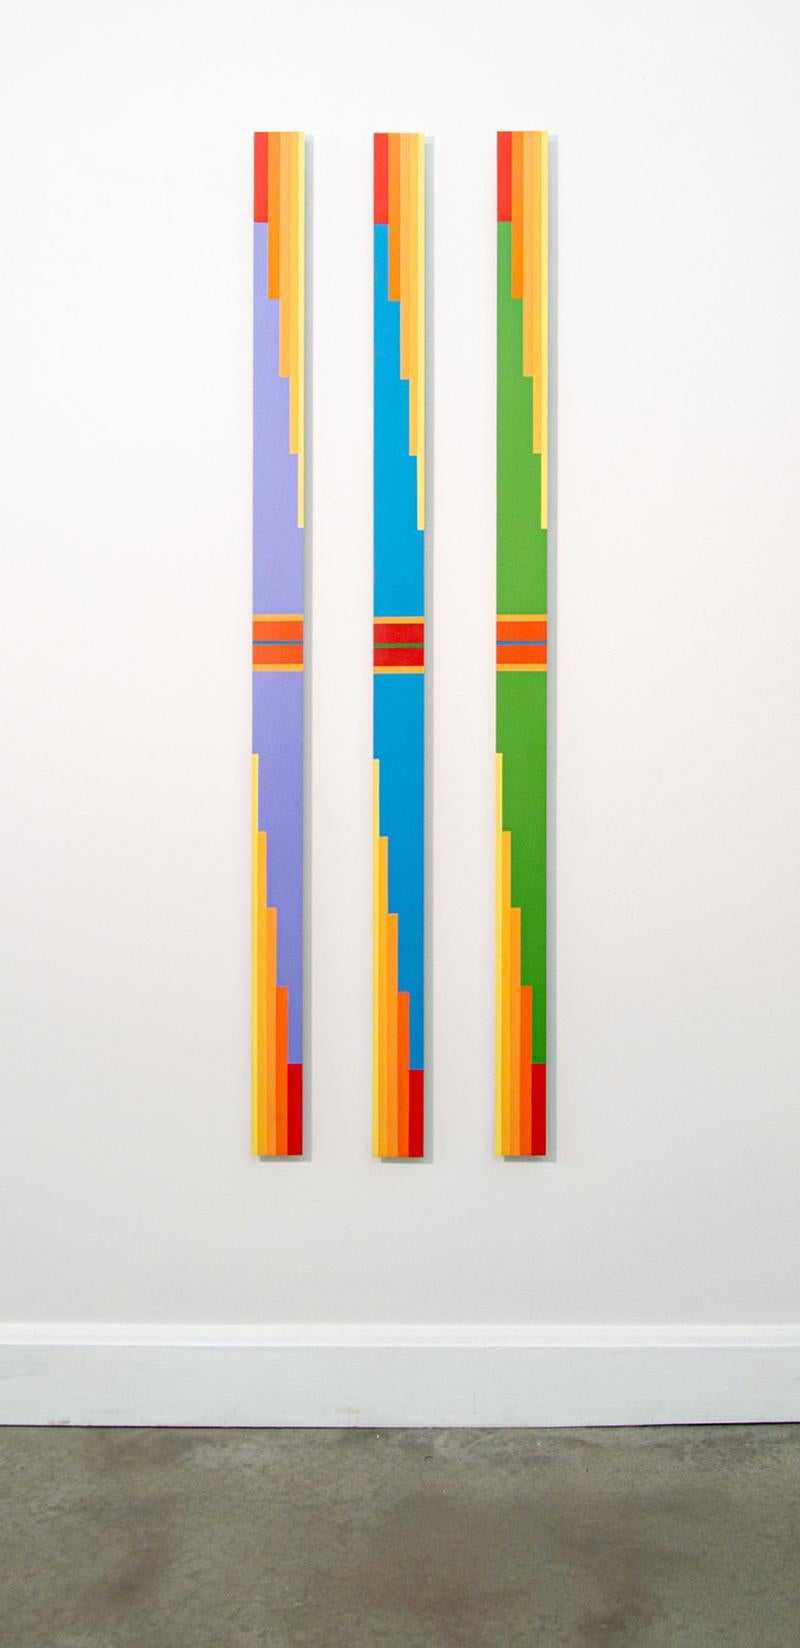 TTH 6.2 Trio - tall, narrow, playful, geometric abstract, acrylic on aluminum - Painting by Burton Kramer